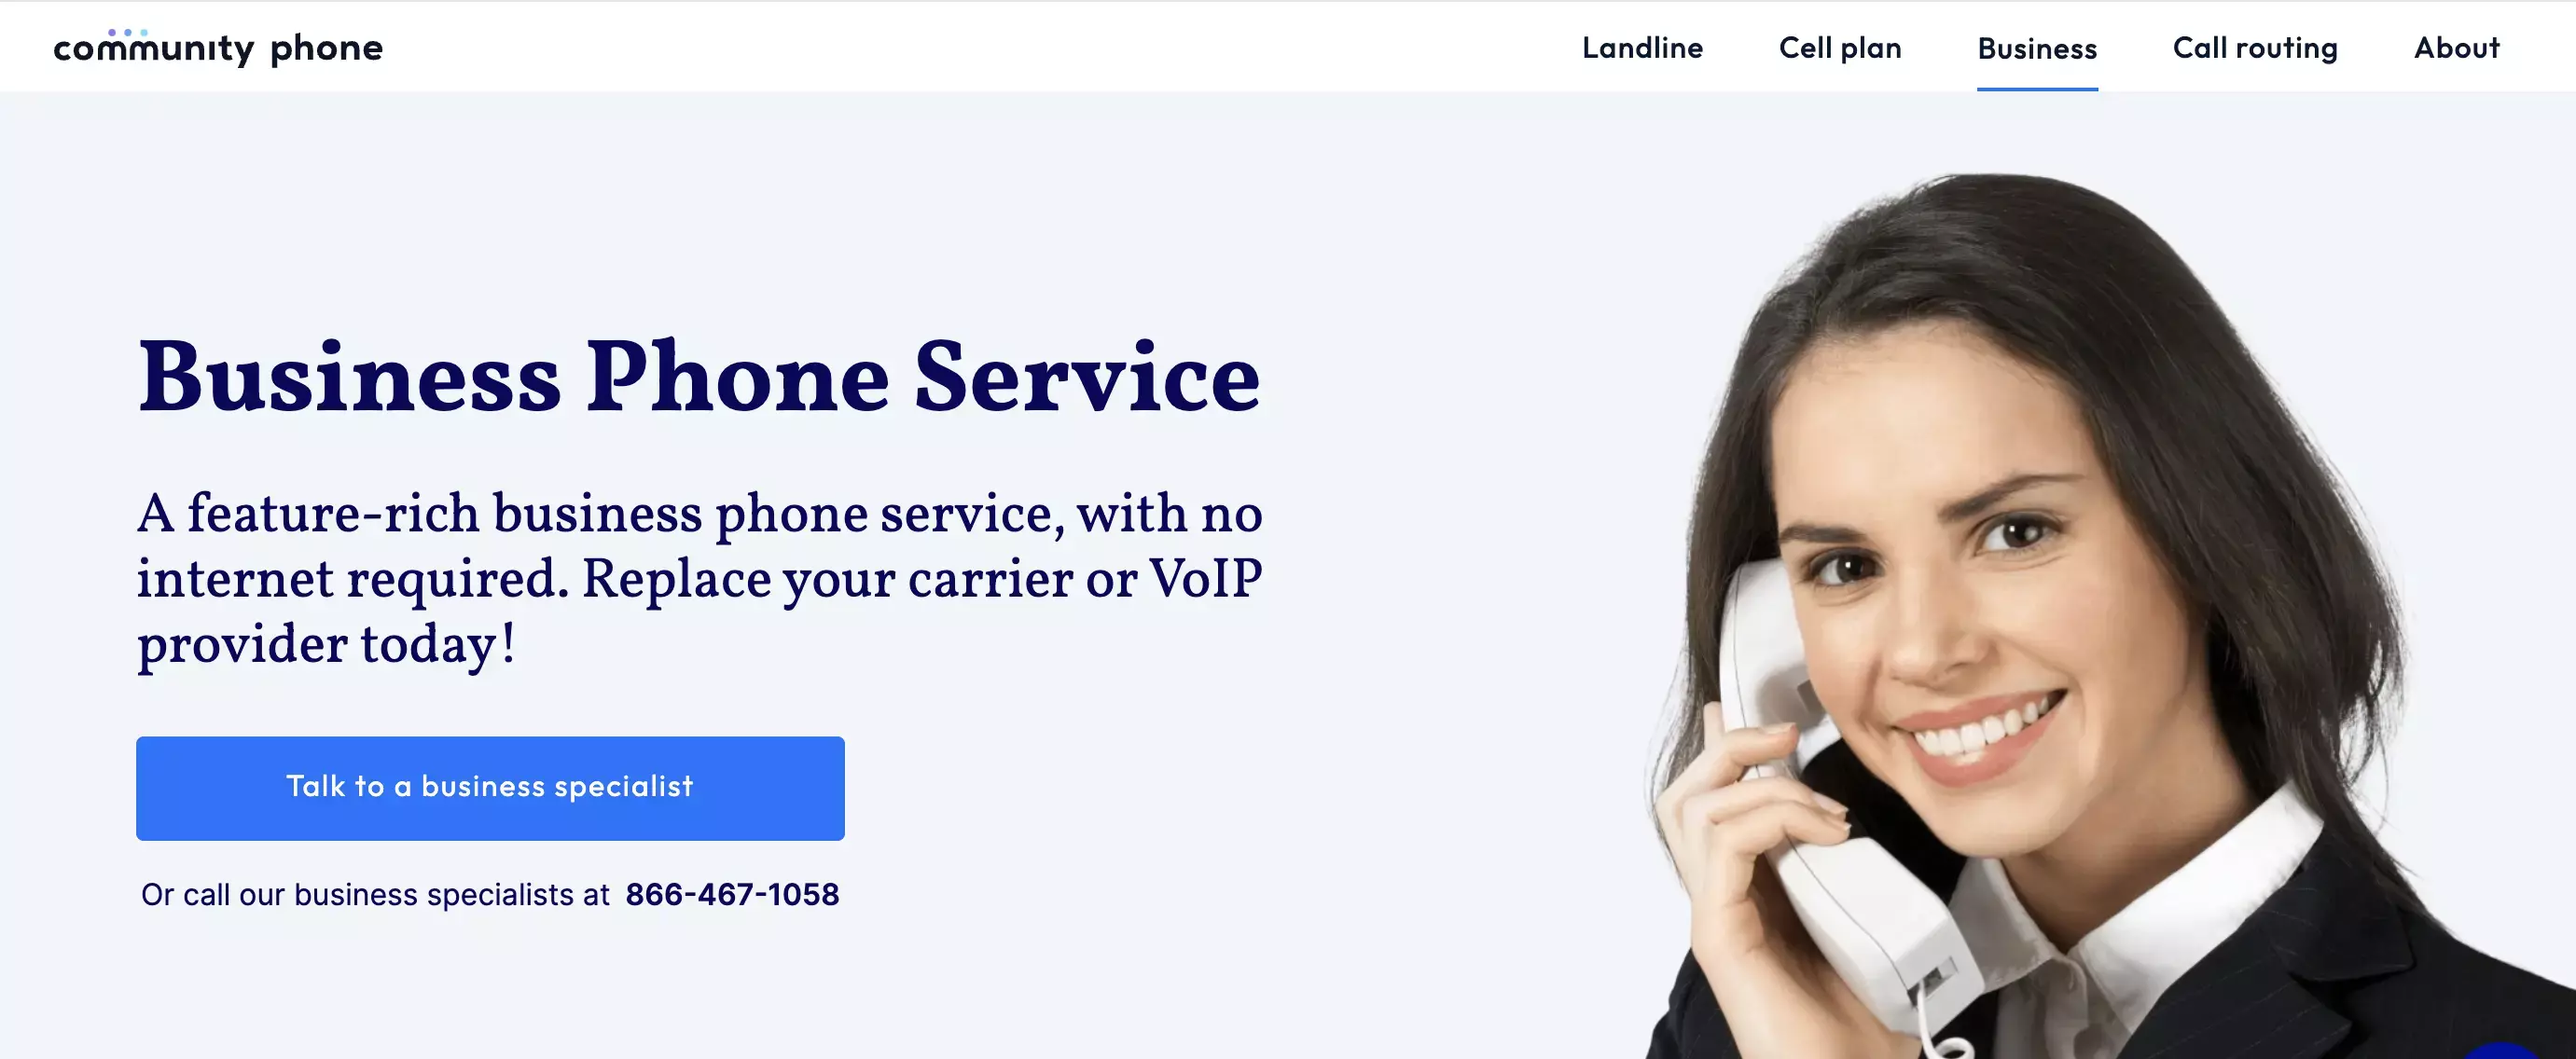 Image of Community Phone landline service